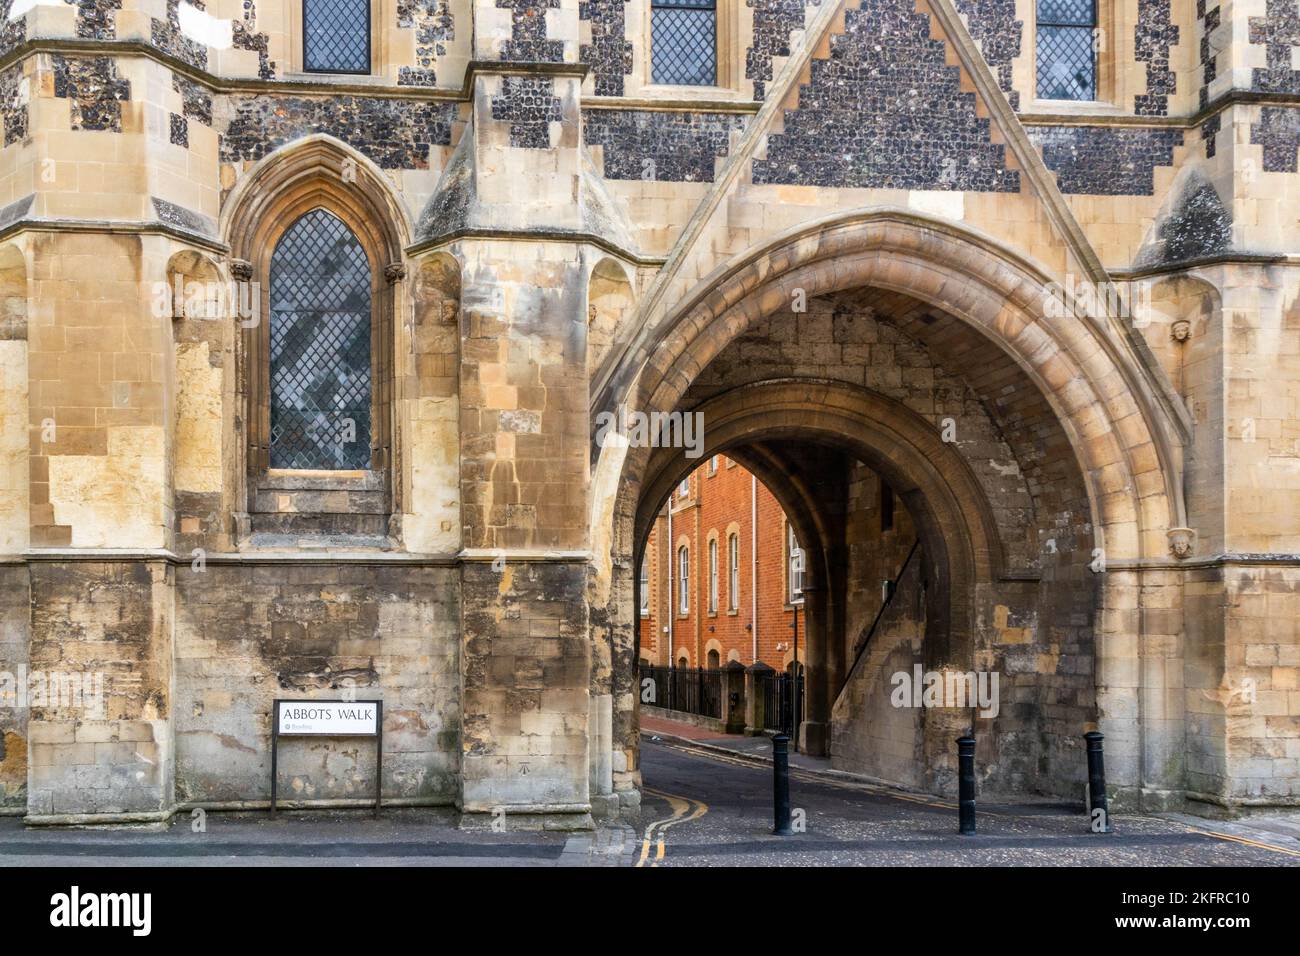 The Abbey Gateway, Abbots Walk, Reading, Berkshire, England Stock Photo